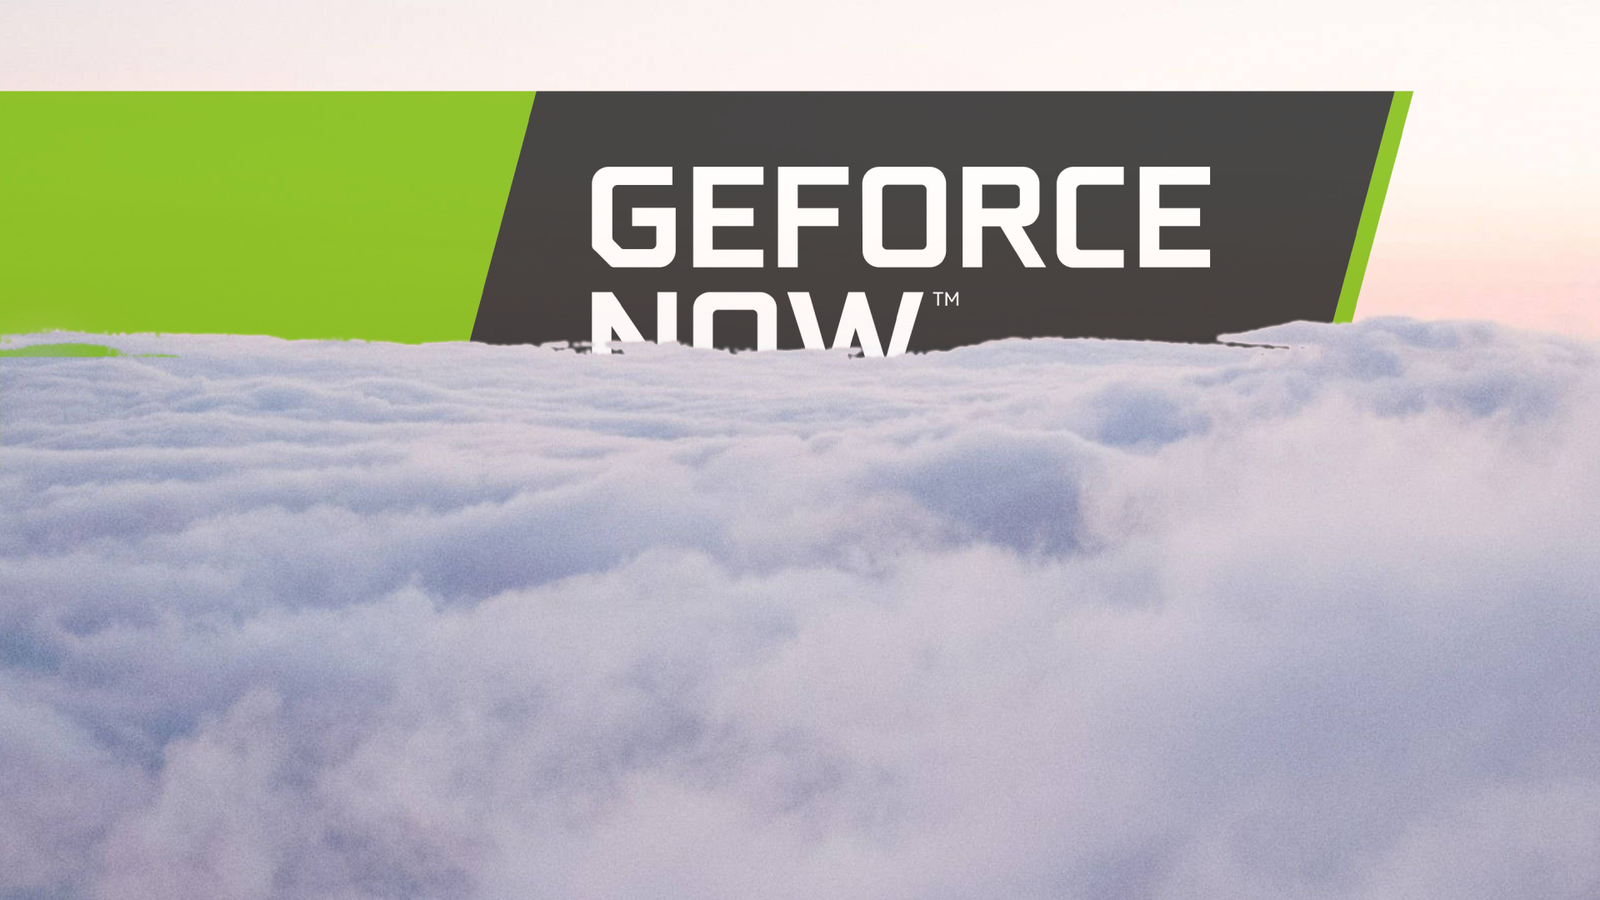 Fortnite Mobile Geforce Now VS Xbox Cloud Gaming 